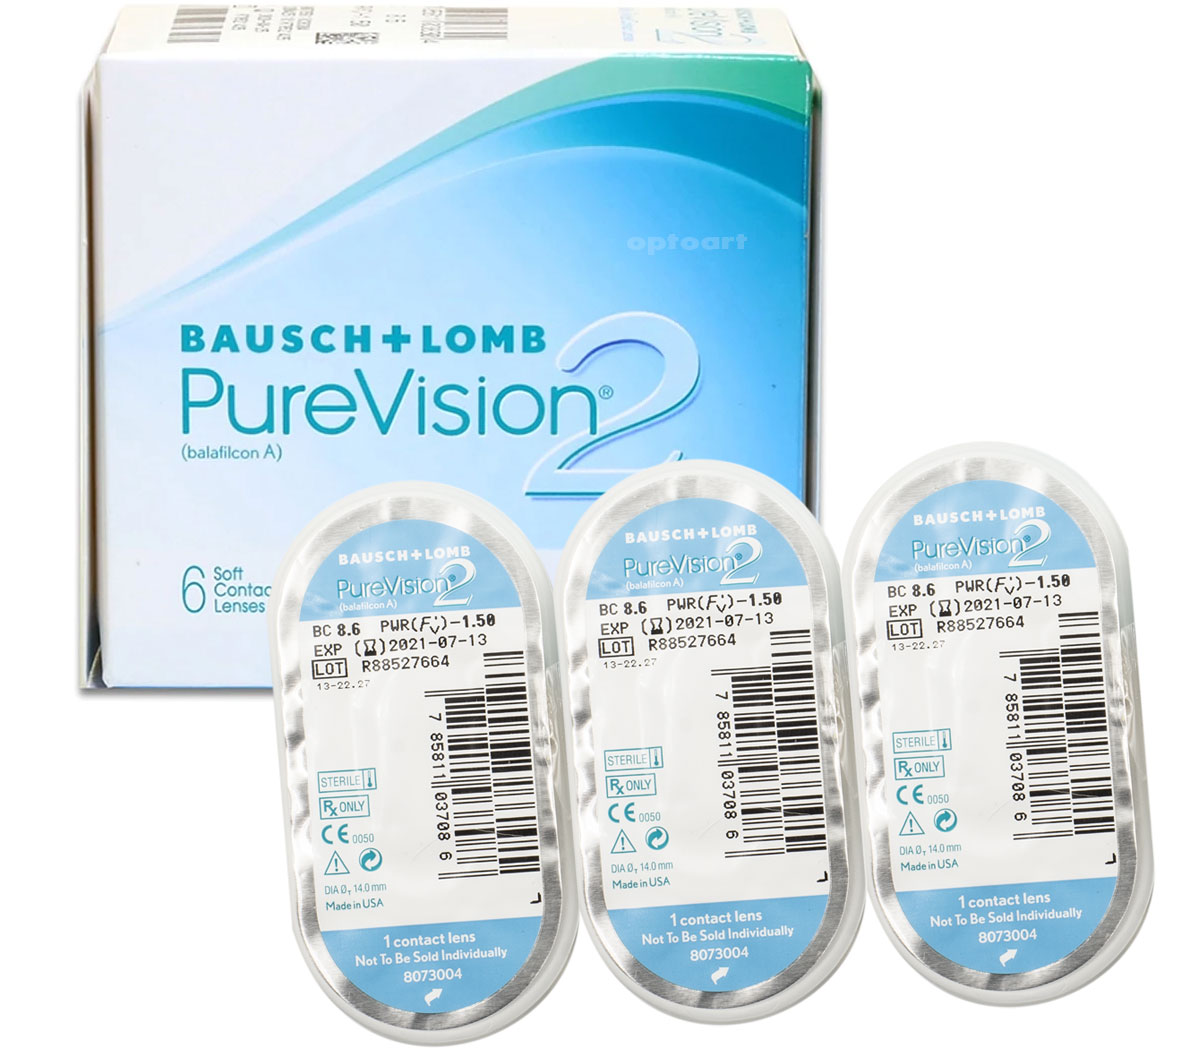 Bausch & Lomb Pure Vision 2 3 szt. Soczewki miesięczne (-3.50 dpt & BC 8.6)